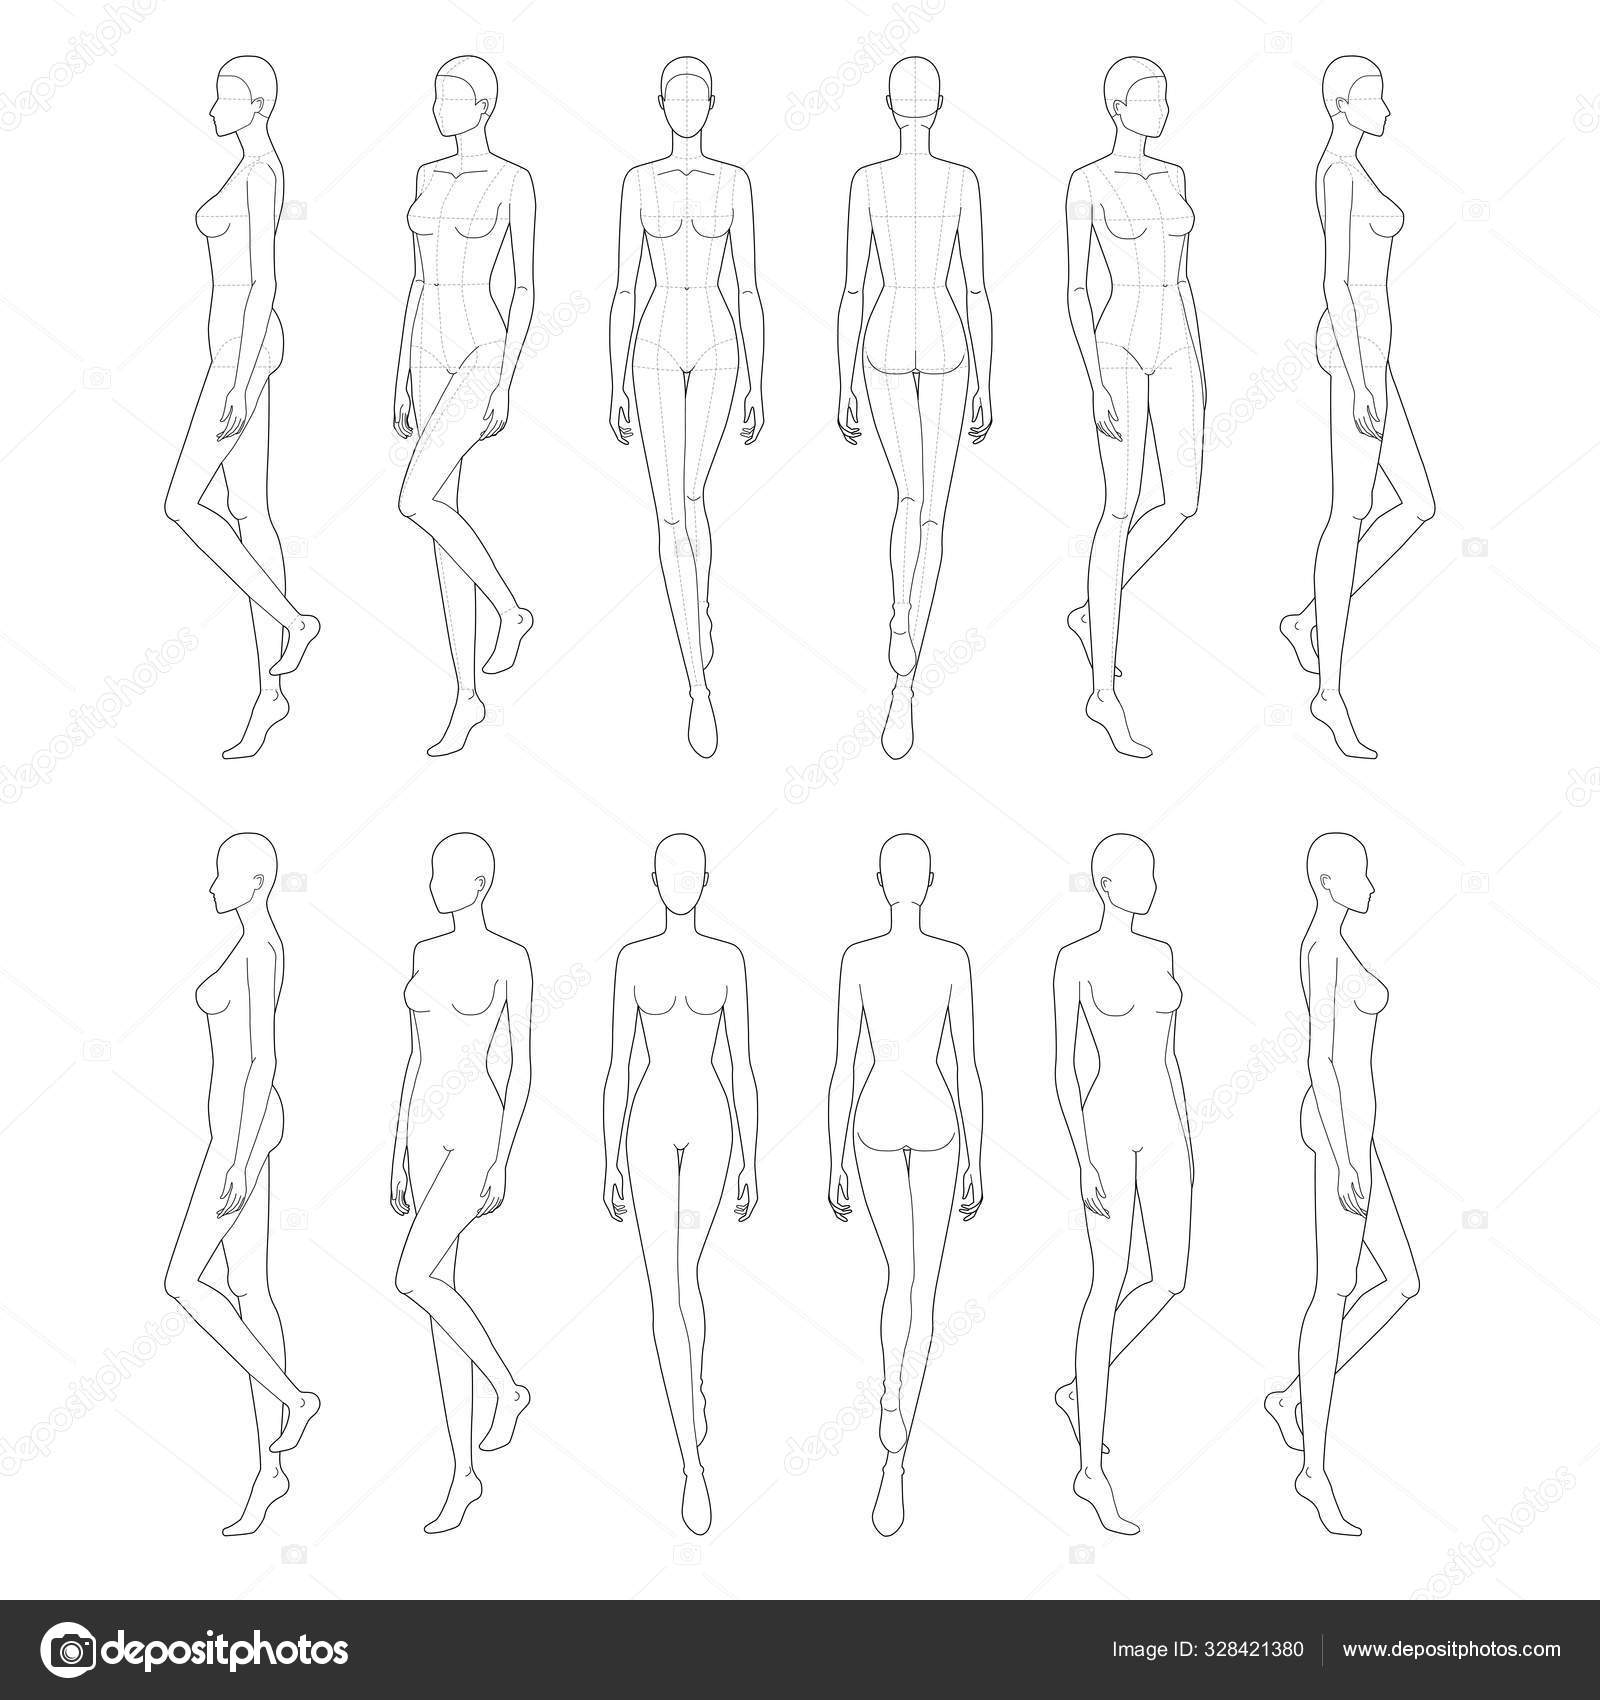 Walking - Male (Back) Dimensions & Drawings | Dimensions.com